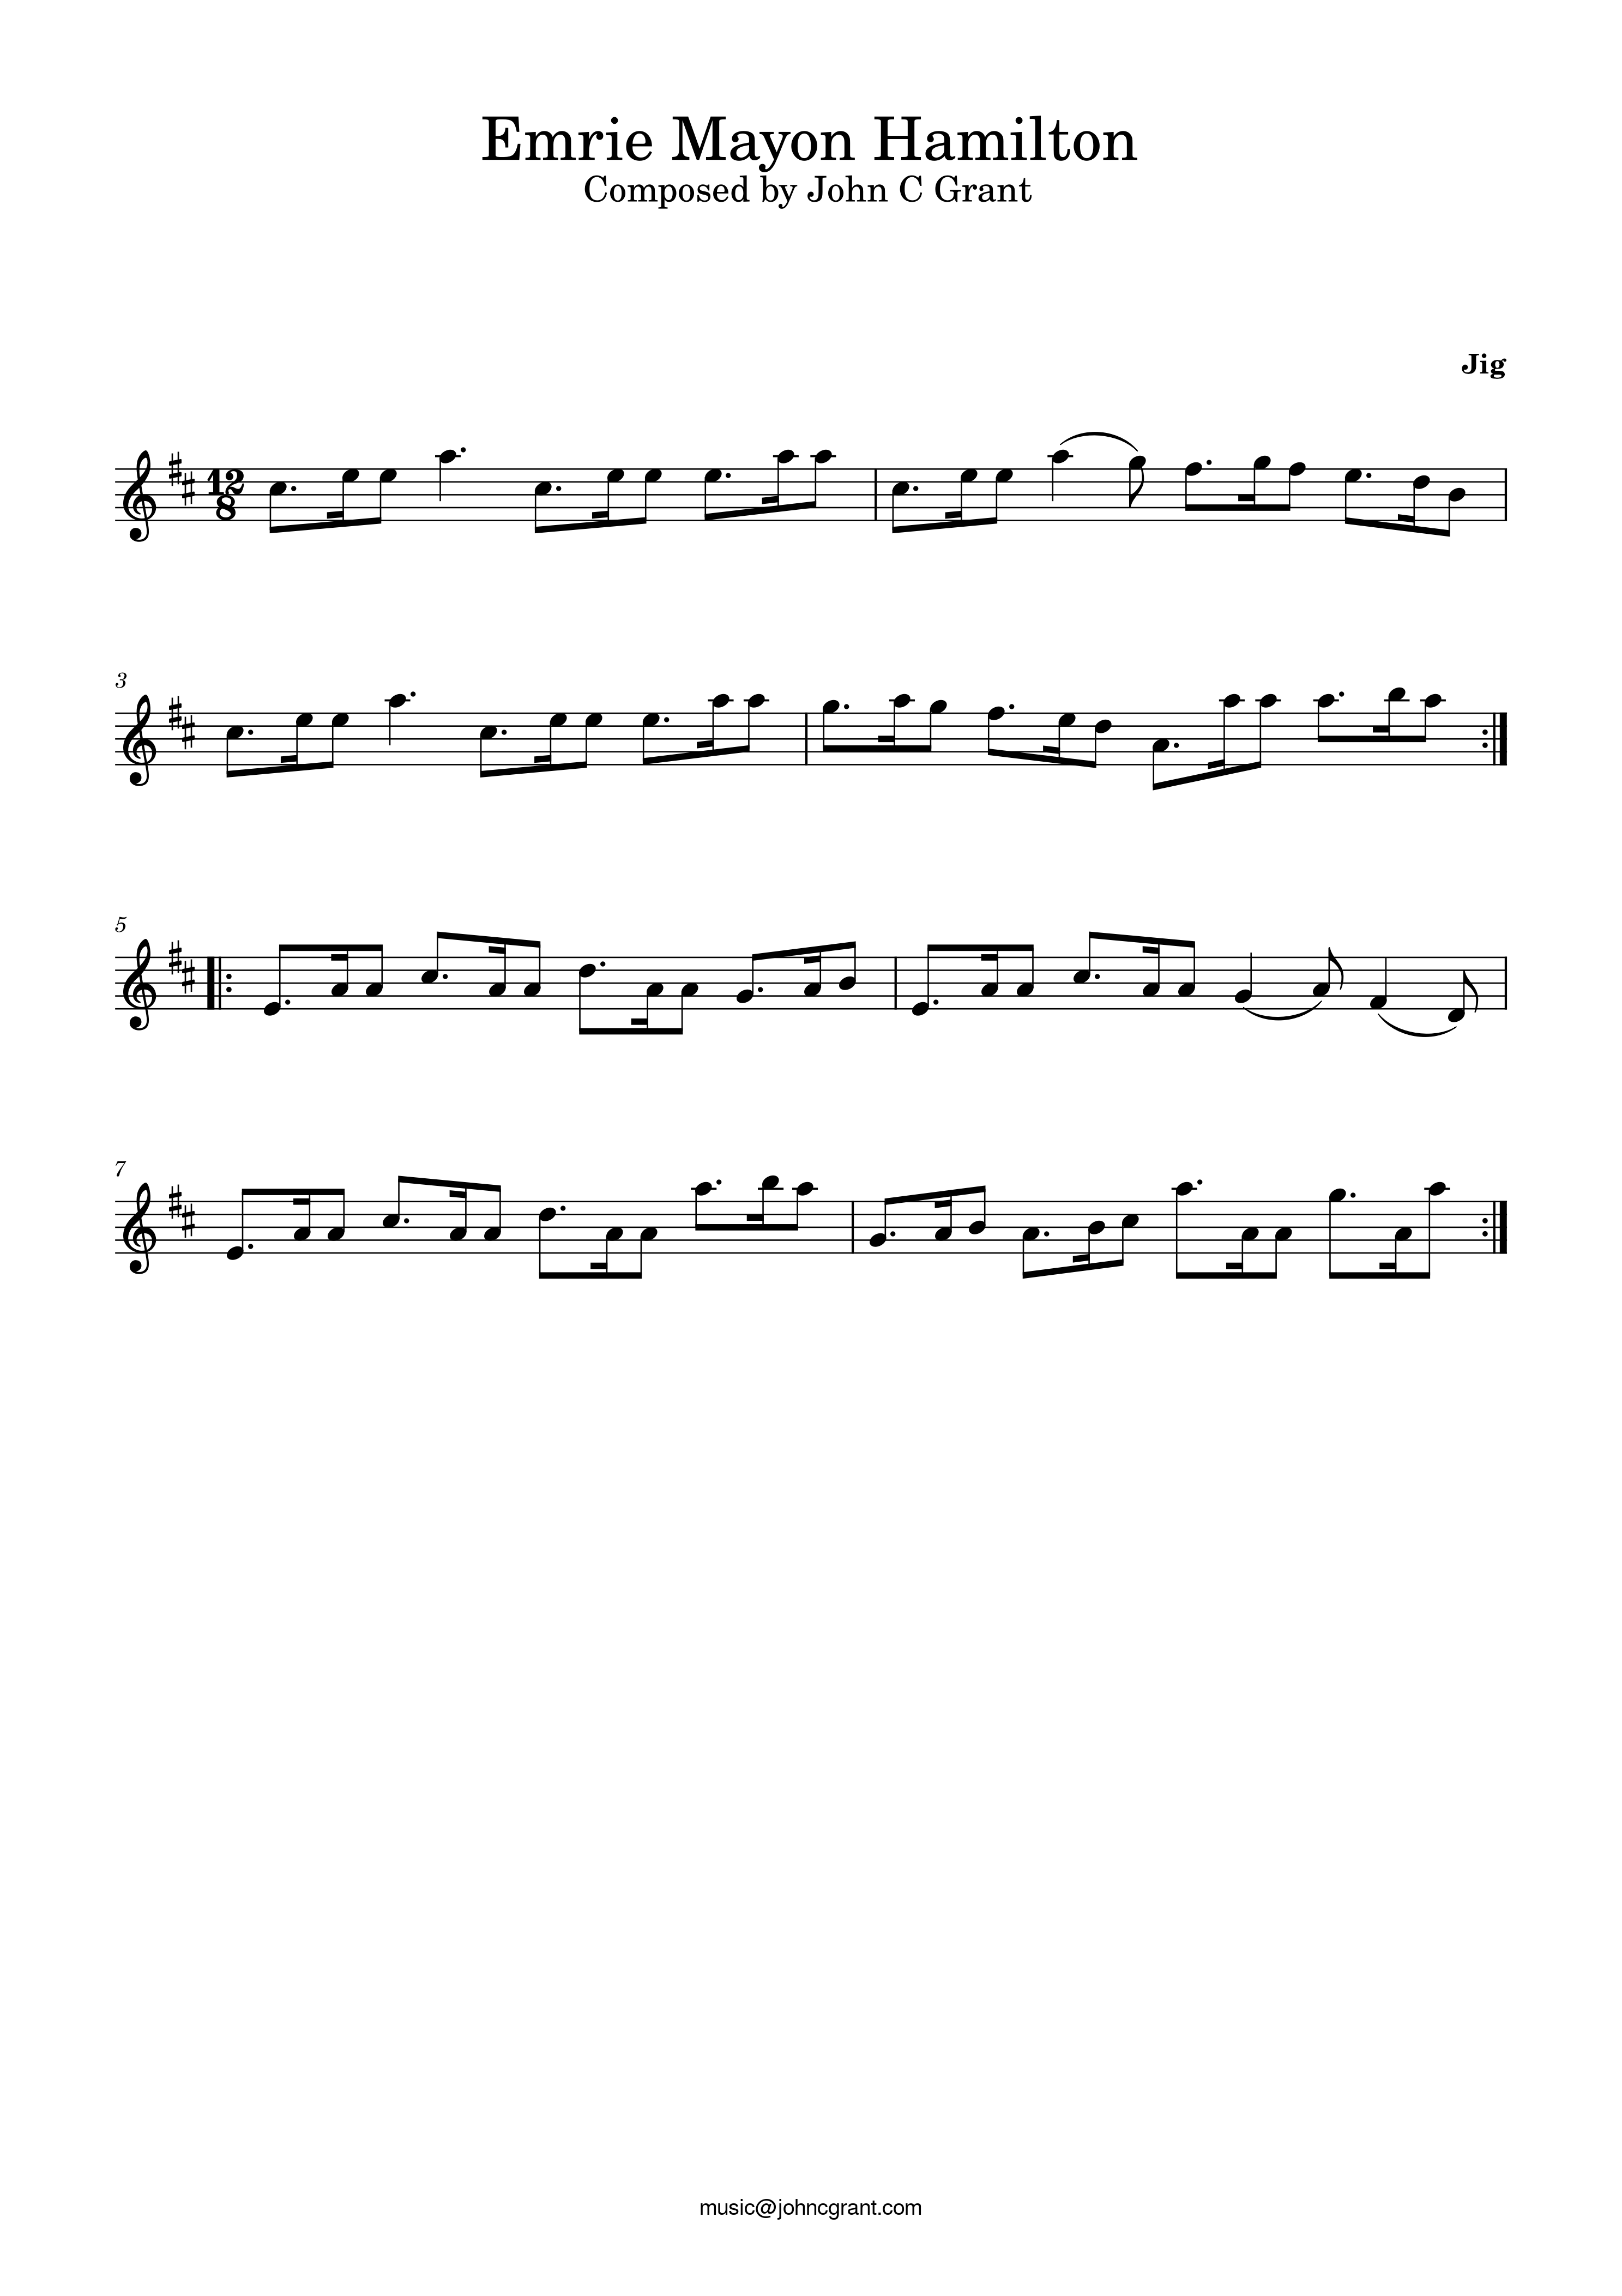 Emrie Mayon Hamilton - Composed by John C Grant (https://johncgrant.com). Traditional composer from Kilmarnock, Ayrshire, Scotland.